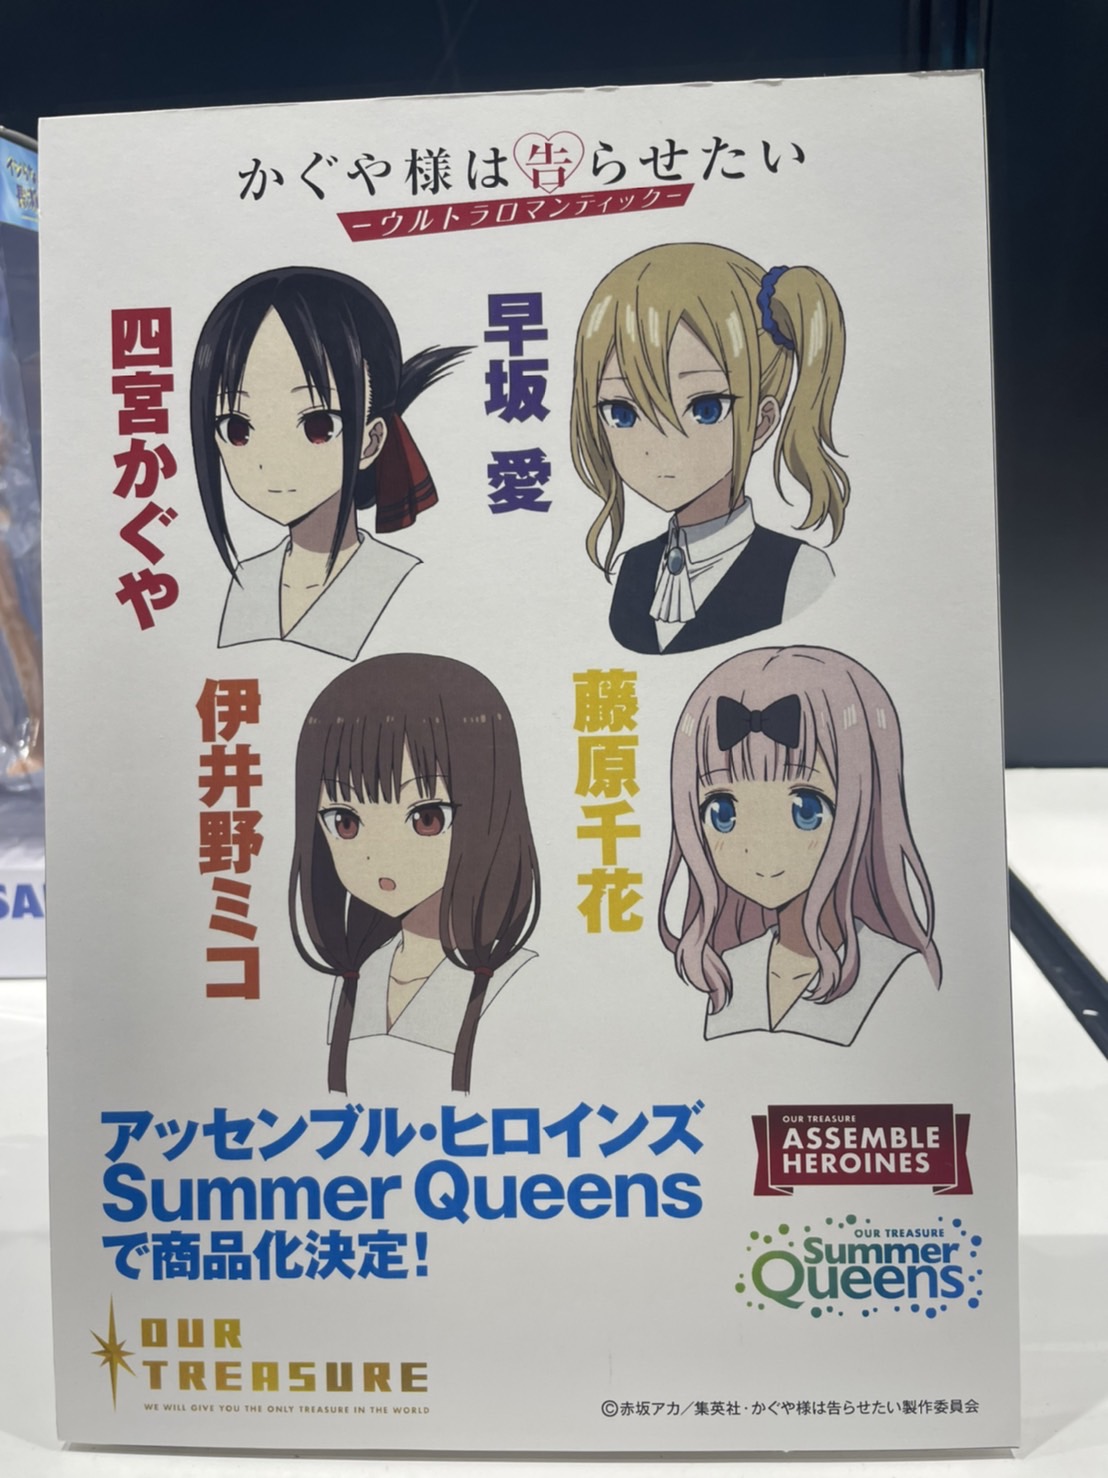 Figurine Kaguya-sama: Love is War - Kaguya Shinomiya / Chika Fujiwara / Miko Iino / Ai Hayasaka - Ver. Summer Queens - 1/8